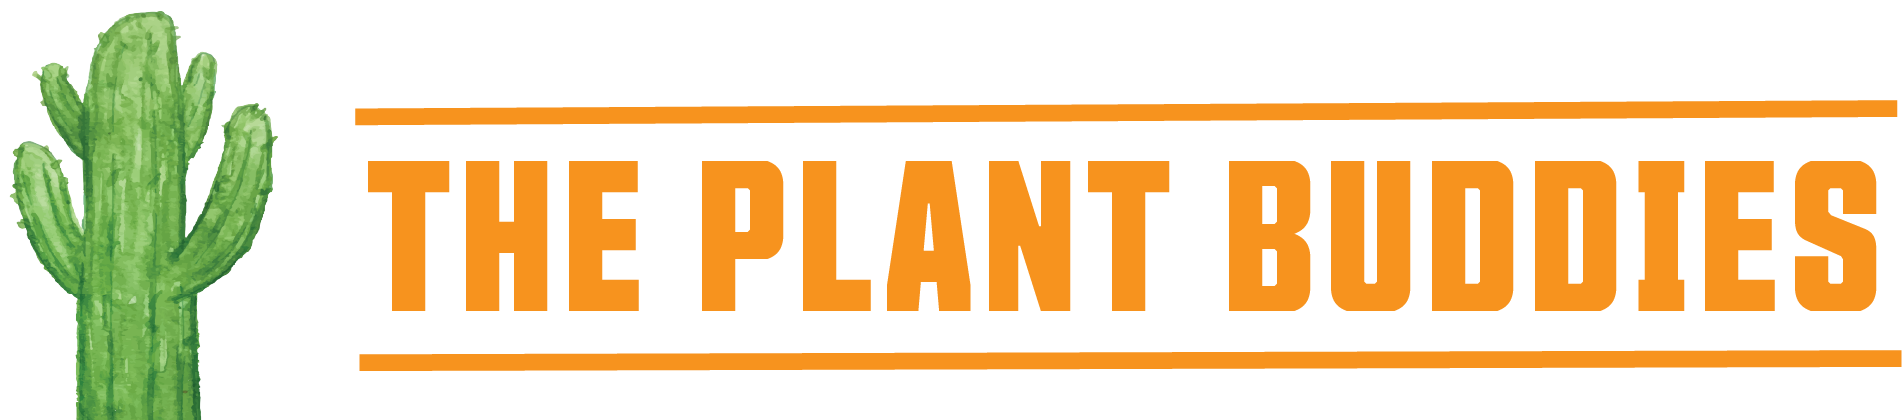 The Plant Buddies